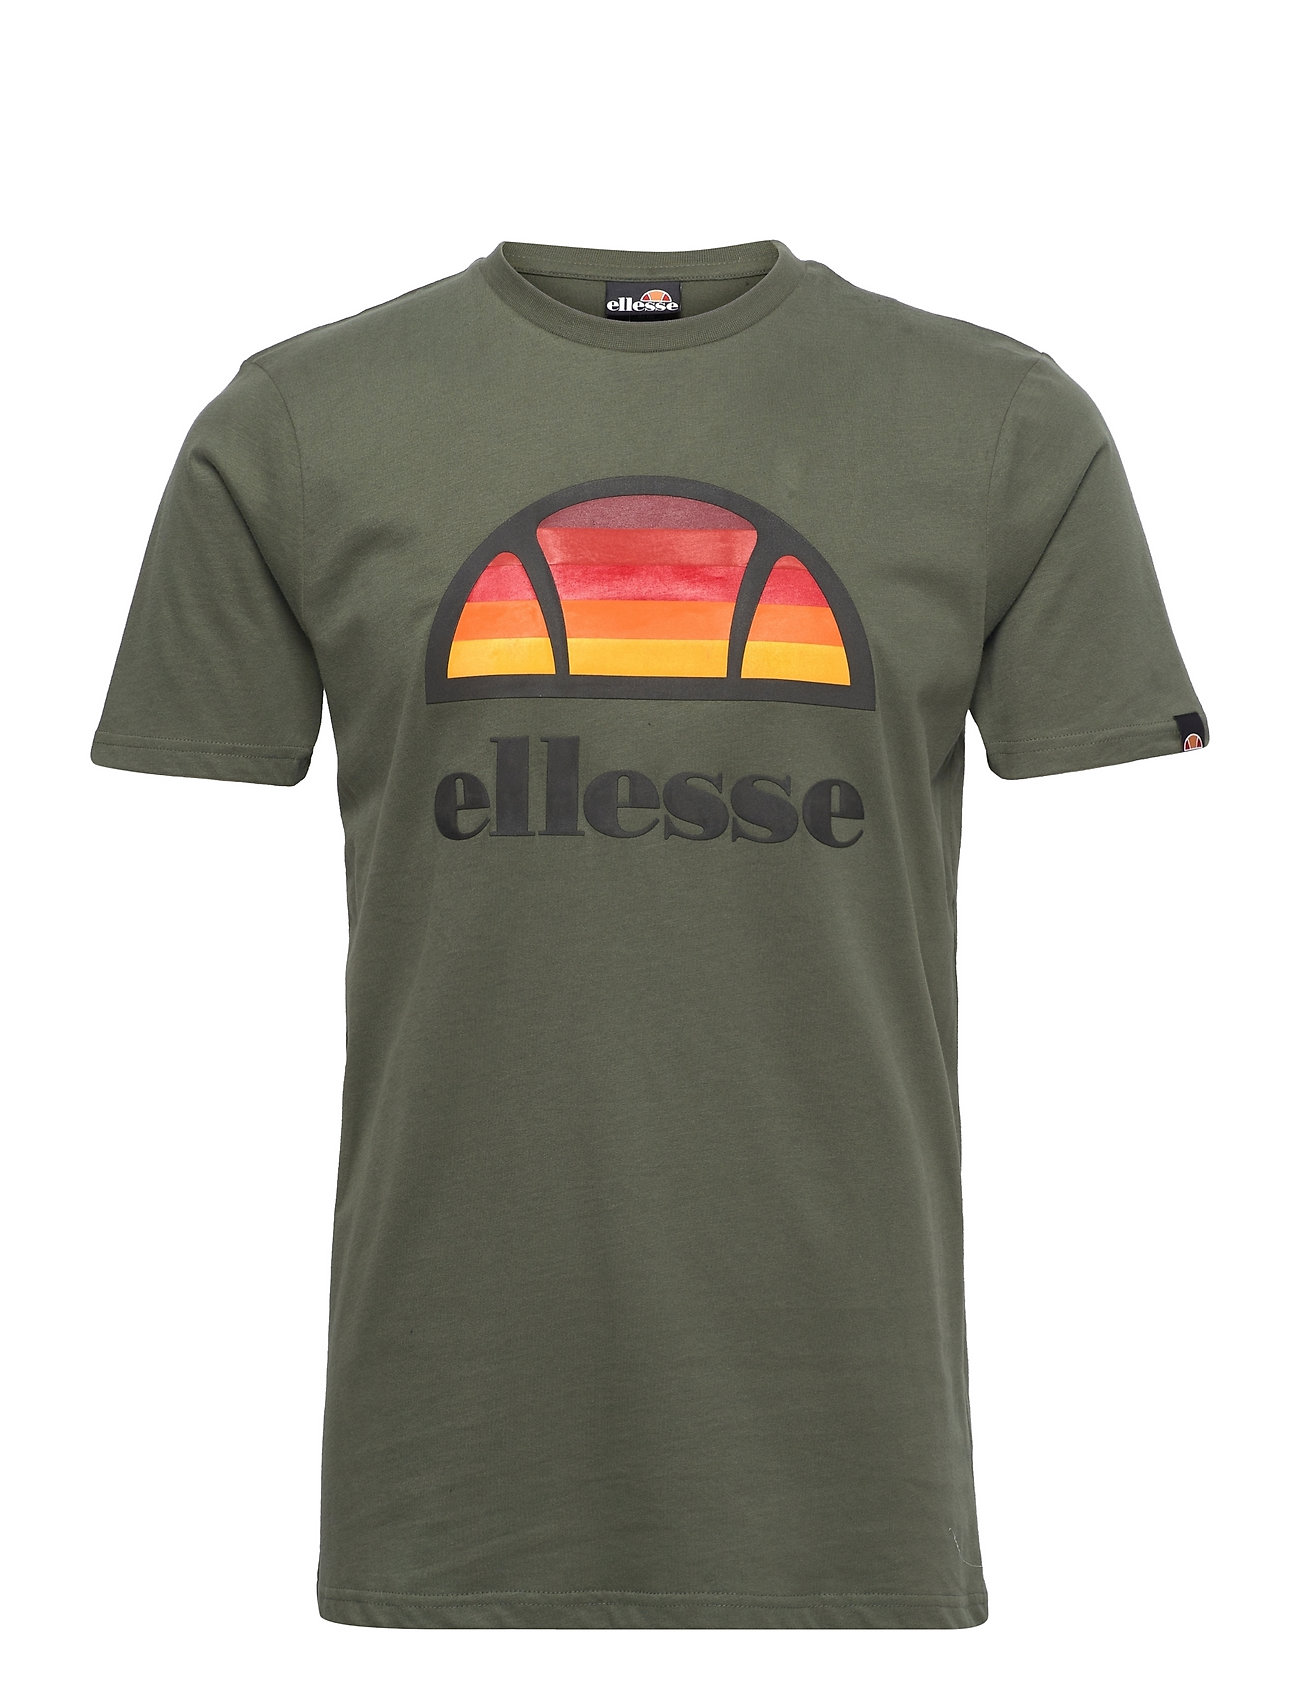 El Sunset Tee T-shirts Short-sleeved Grön Ellesse